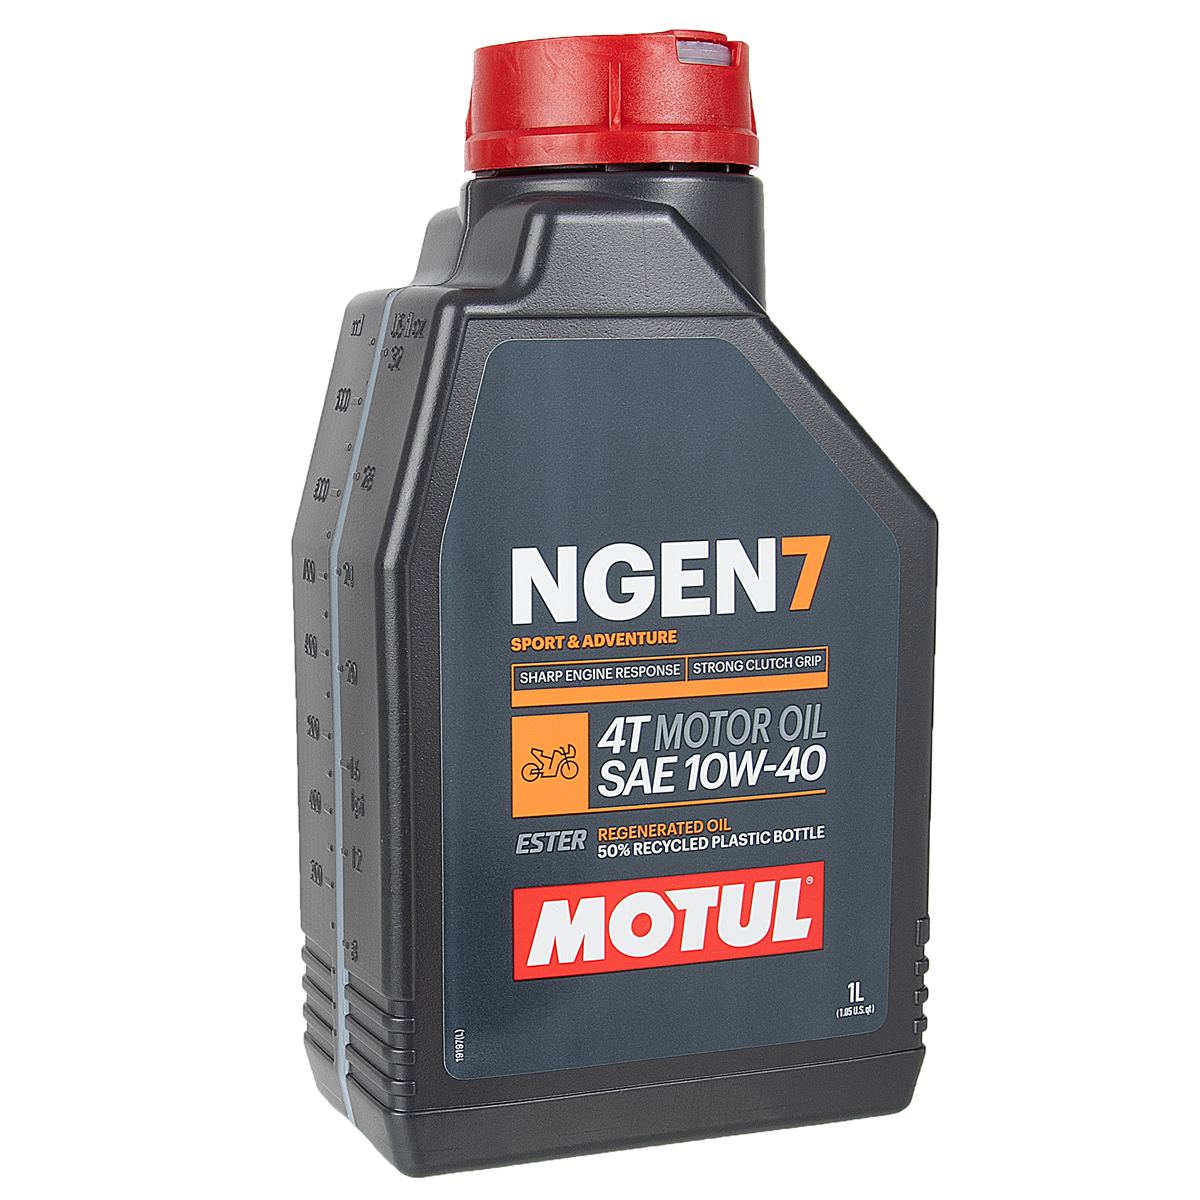 https://www.maciag-offroad.de/shop/artikelbilder/normal/157188/motul-motorenoel-motor-oil-ngen-7-3.jpg